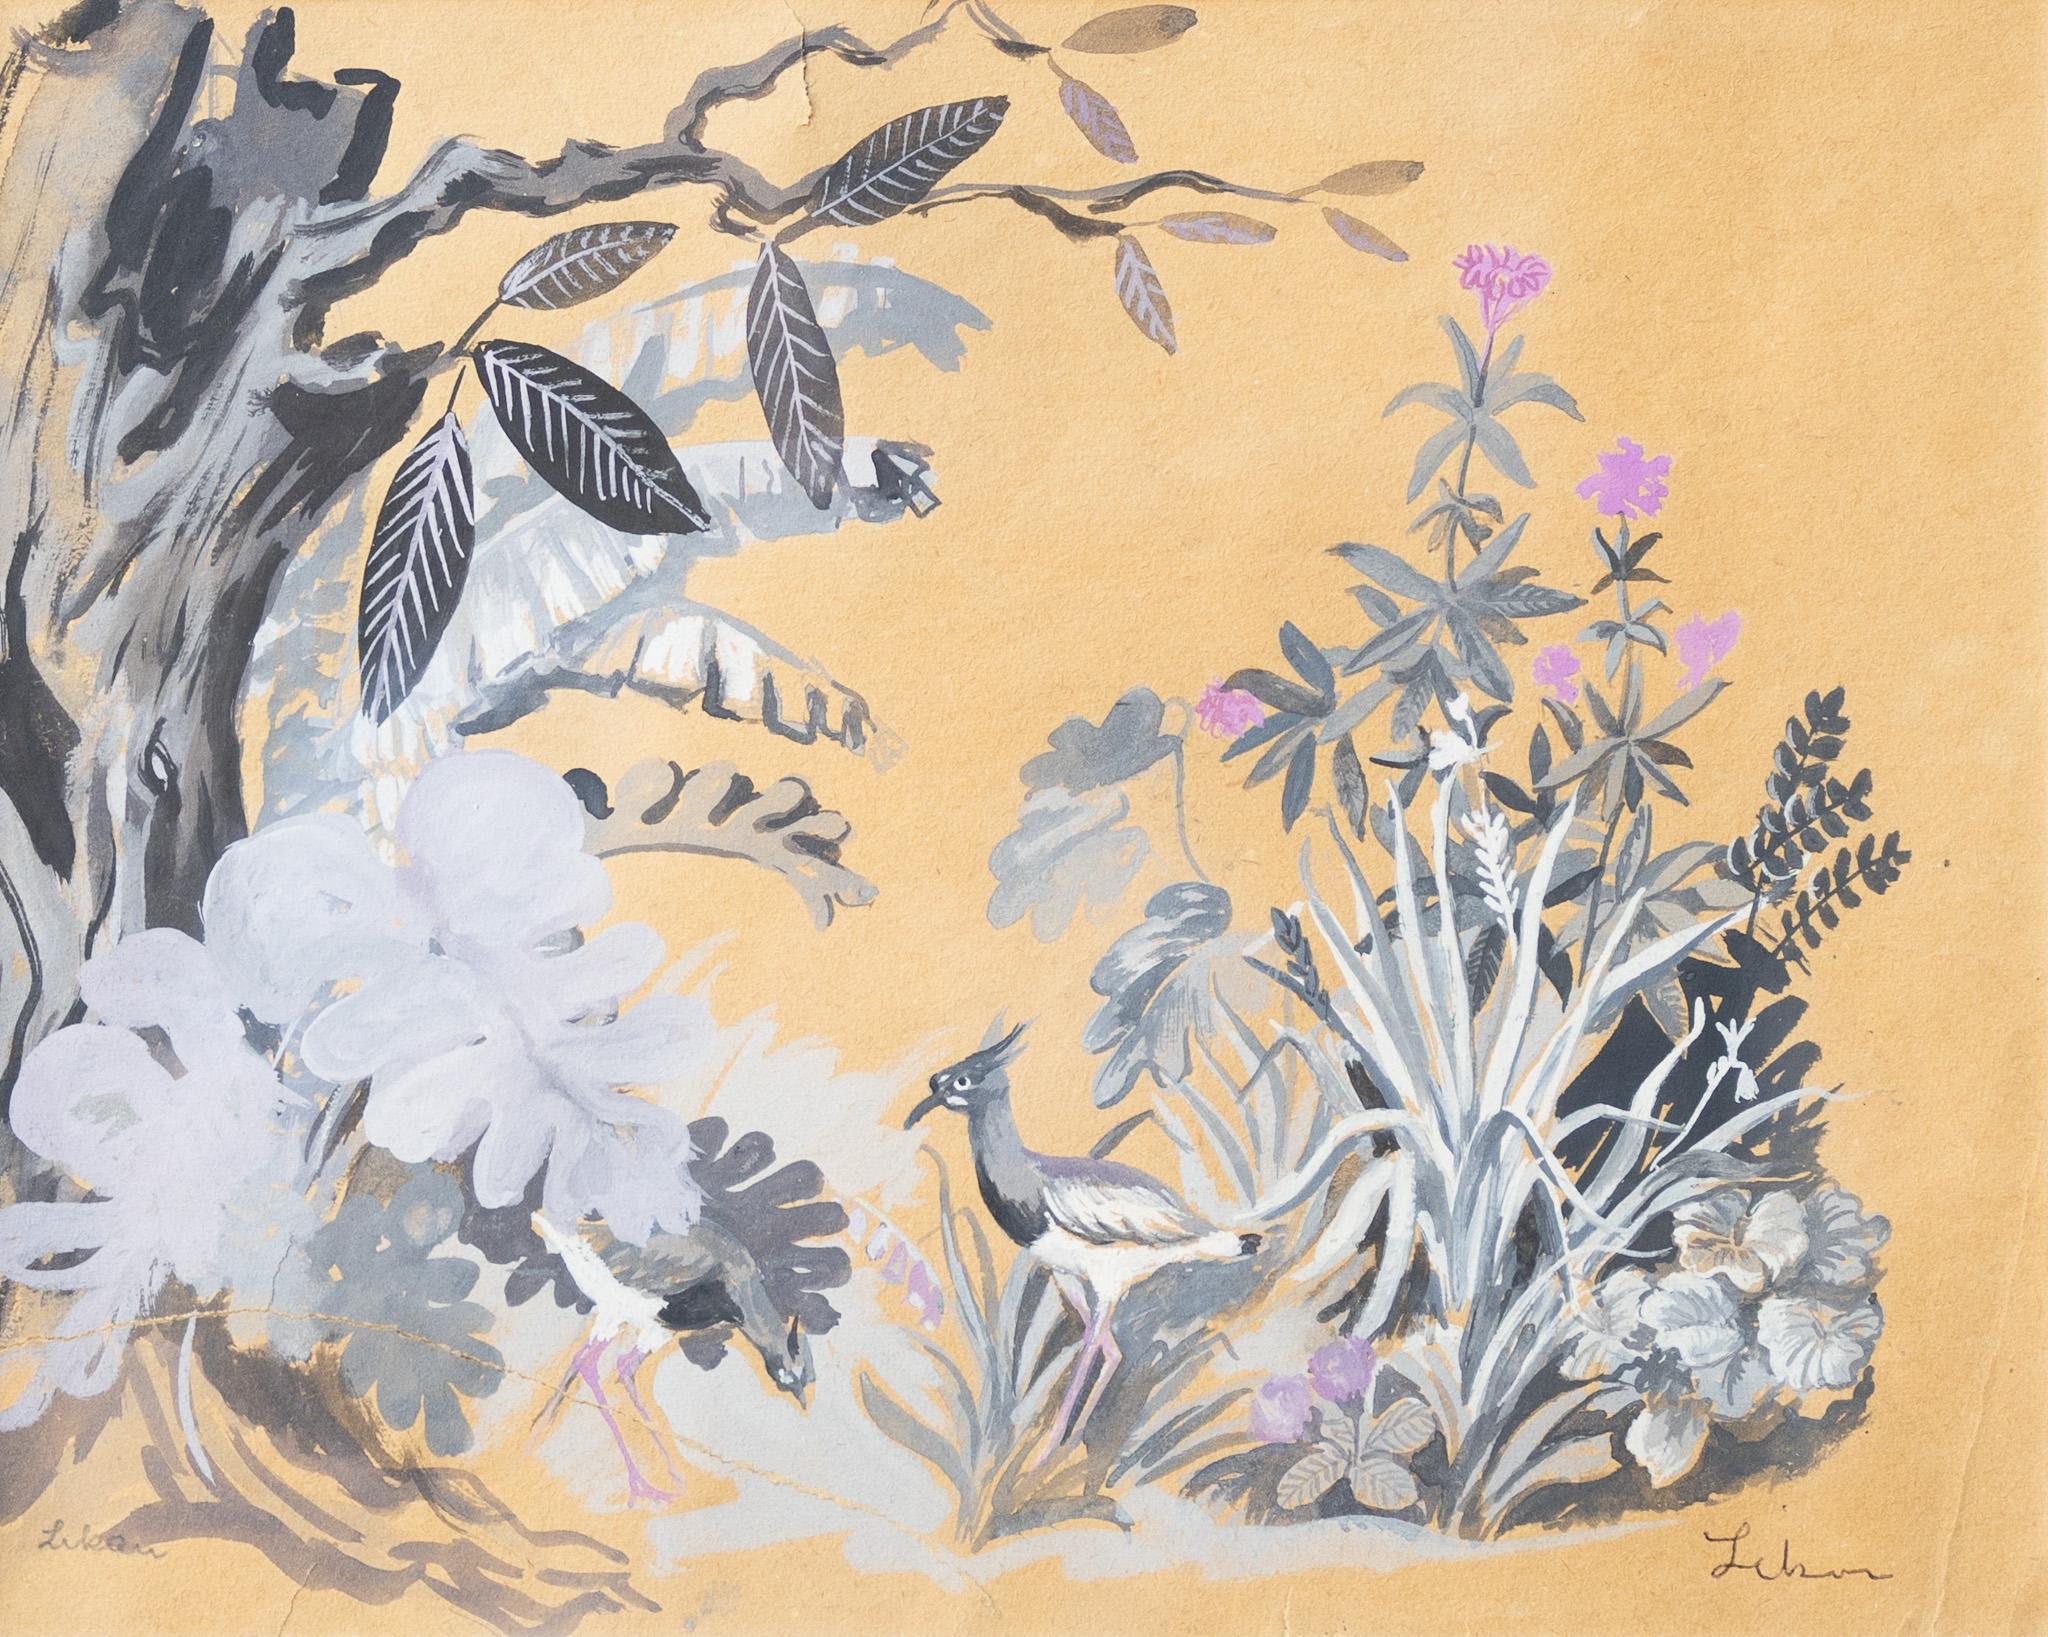 Gustav Likan Landscape Painting - "Tropical Scene in Gold and Purple" Eva Peron Mural Sketch